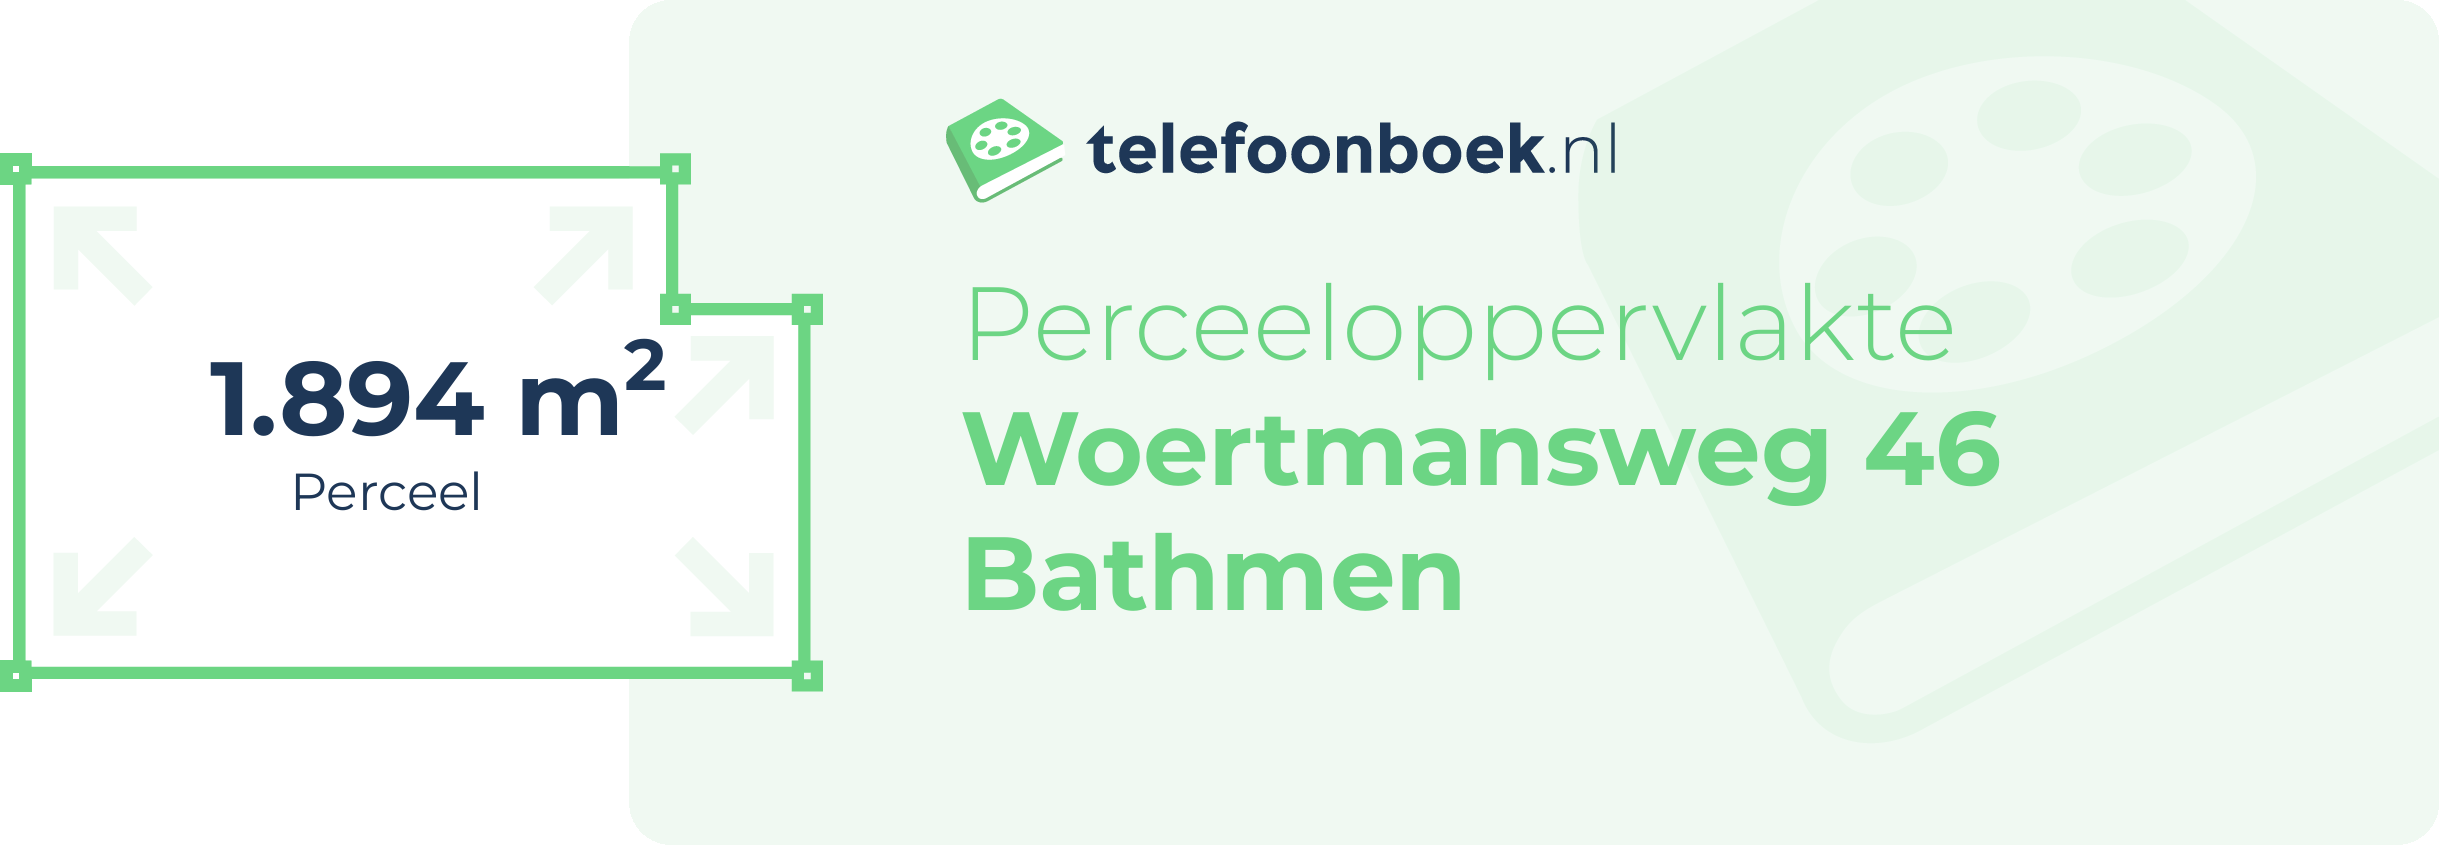 Perceeloppervlakte Woertmansweg 46 Bathmen